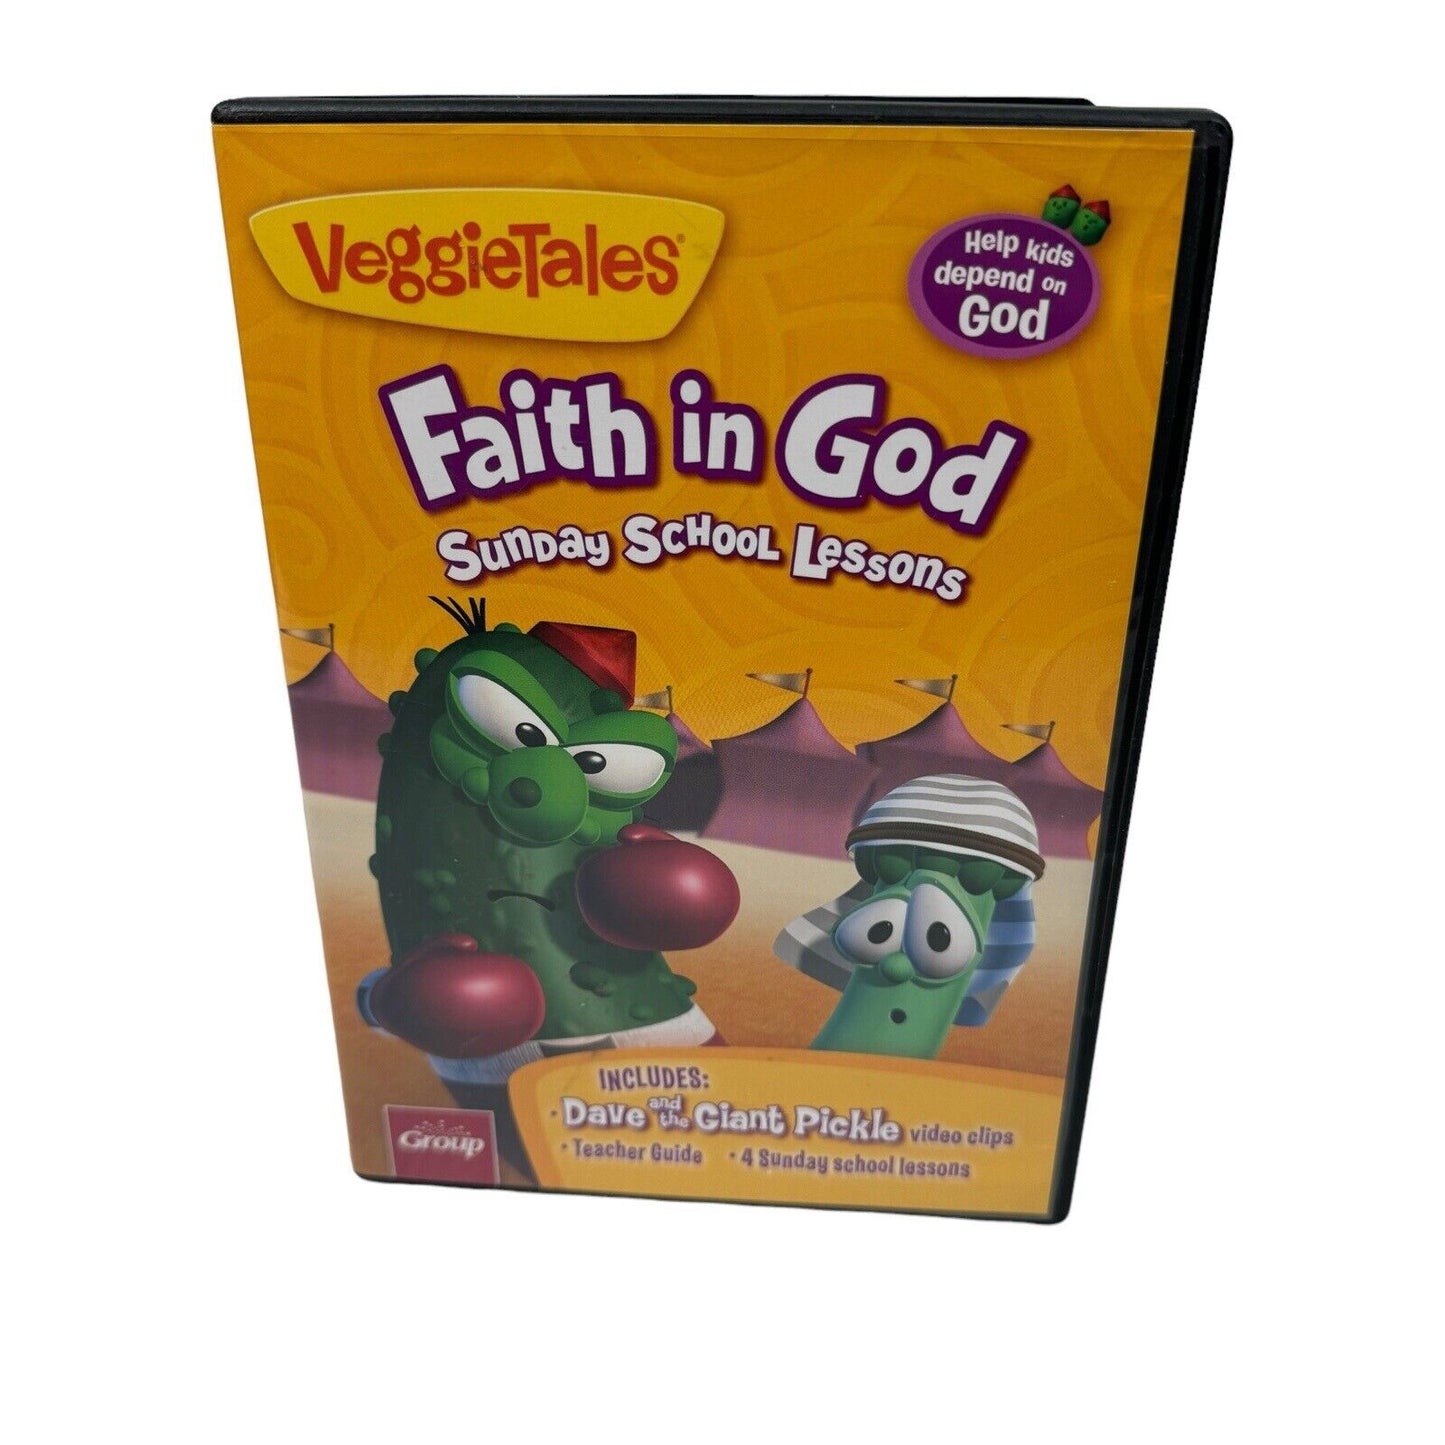 Veggie Tales: Faith In God 4 Sunday School Lessons Group Publishing DVD Set